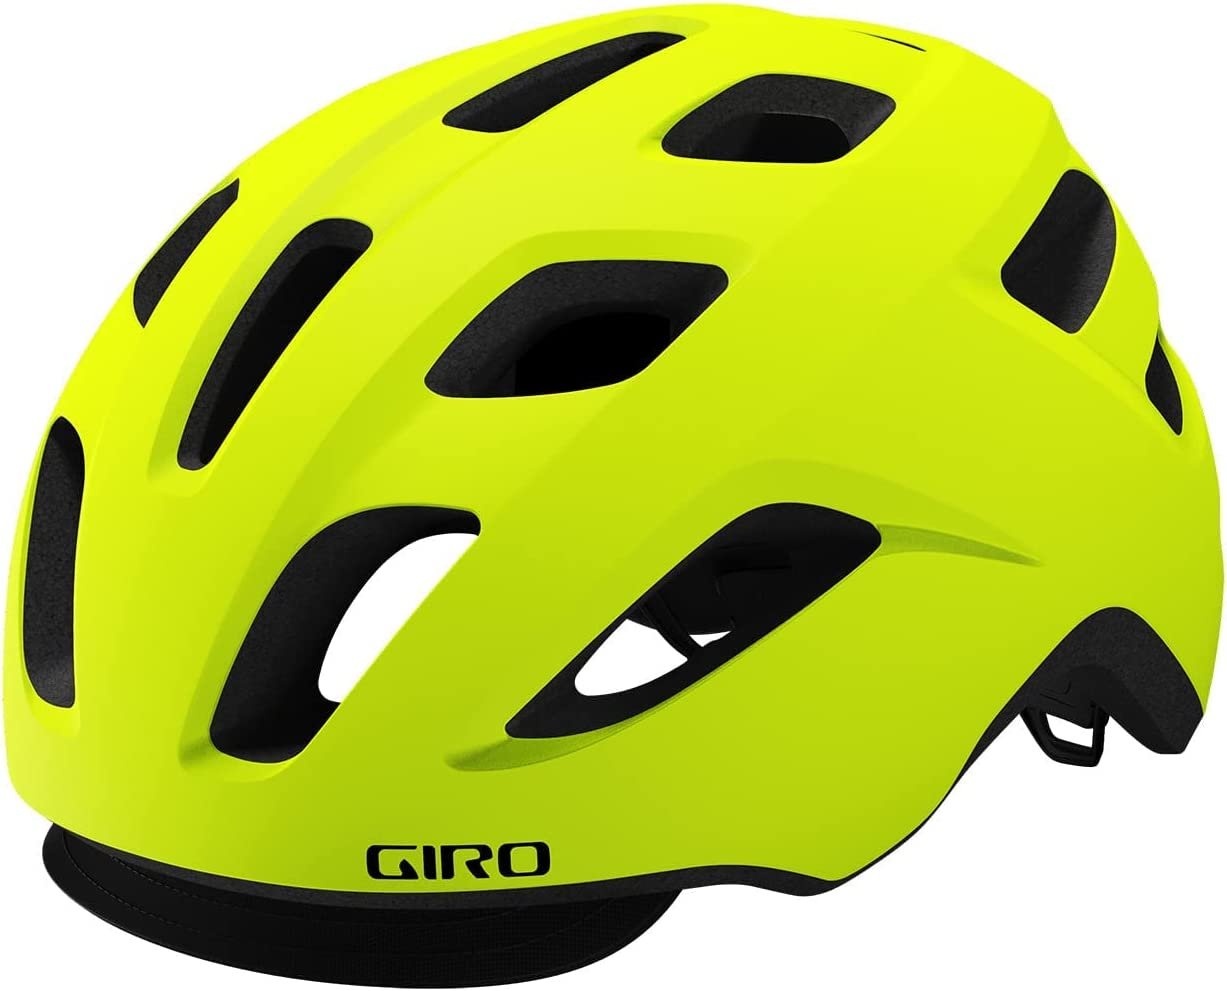 Giro Cormick MIPS Adult Urban Cycling Helmet - Highlight Yellow/Black, Universal Adult (54-61 cm)